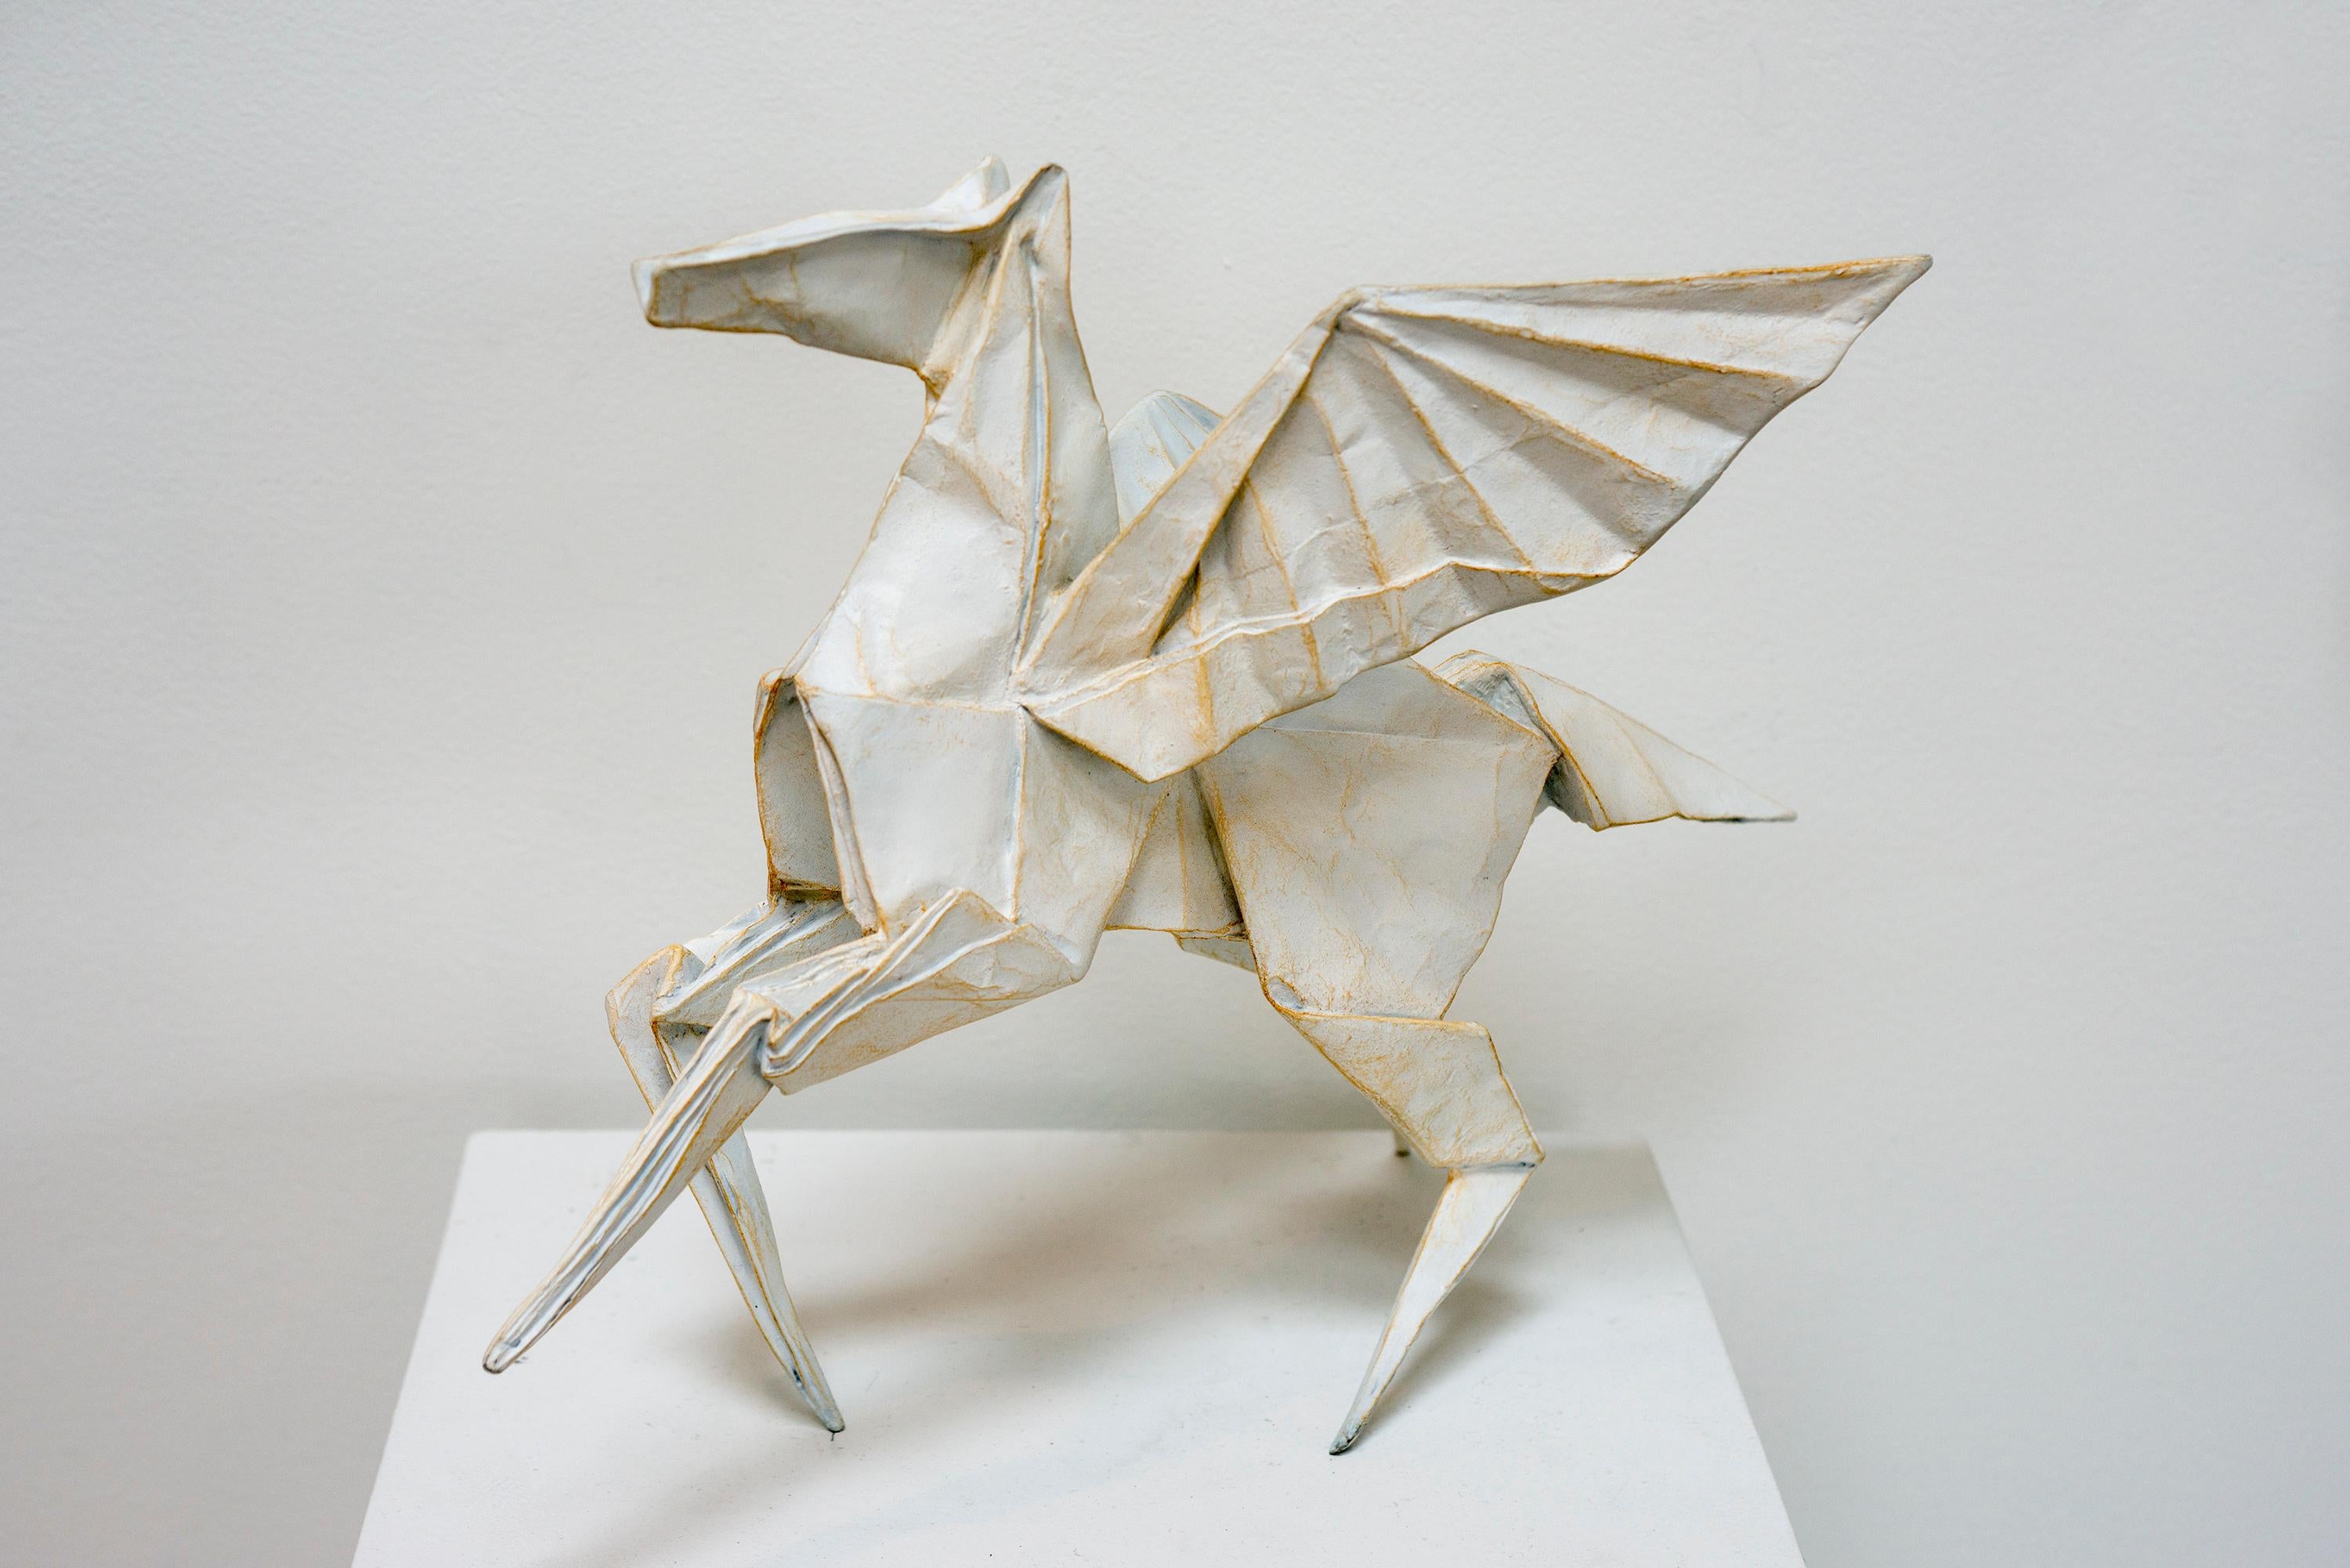 Kevin Box Figurative Sculpture - Hero's Horse - Maquette 39/50 - Robert J. Lang